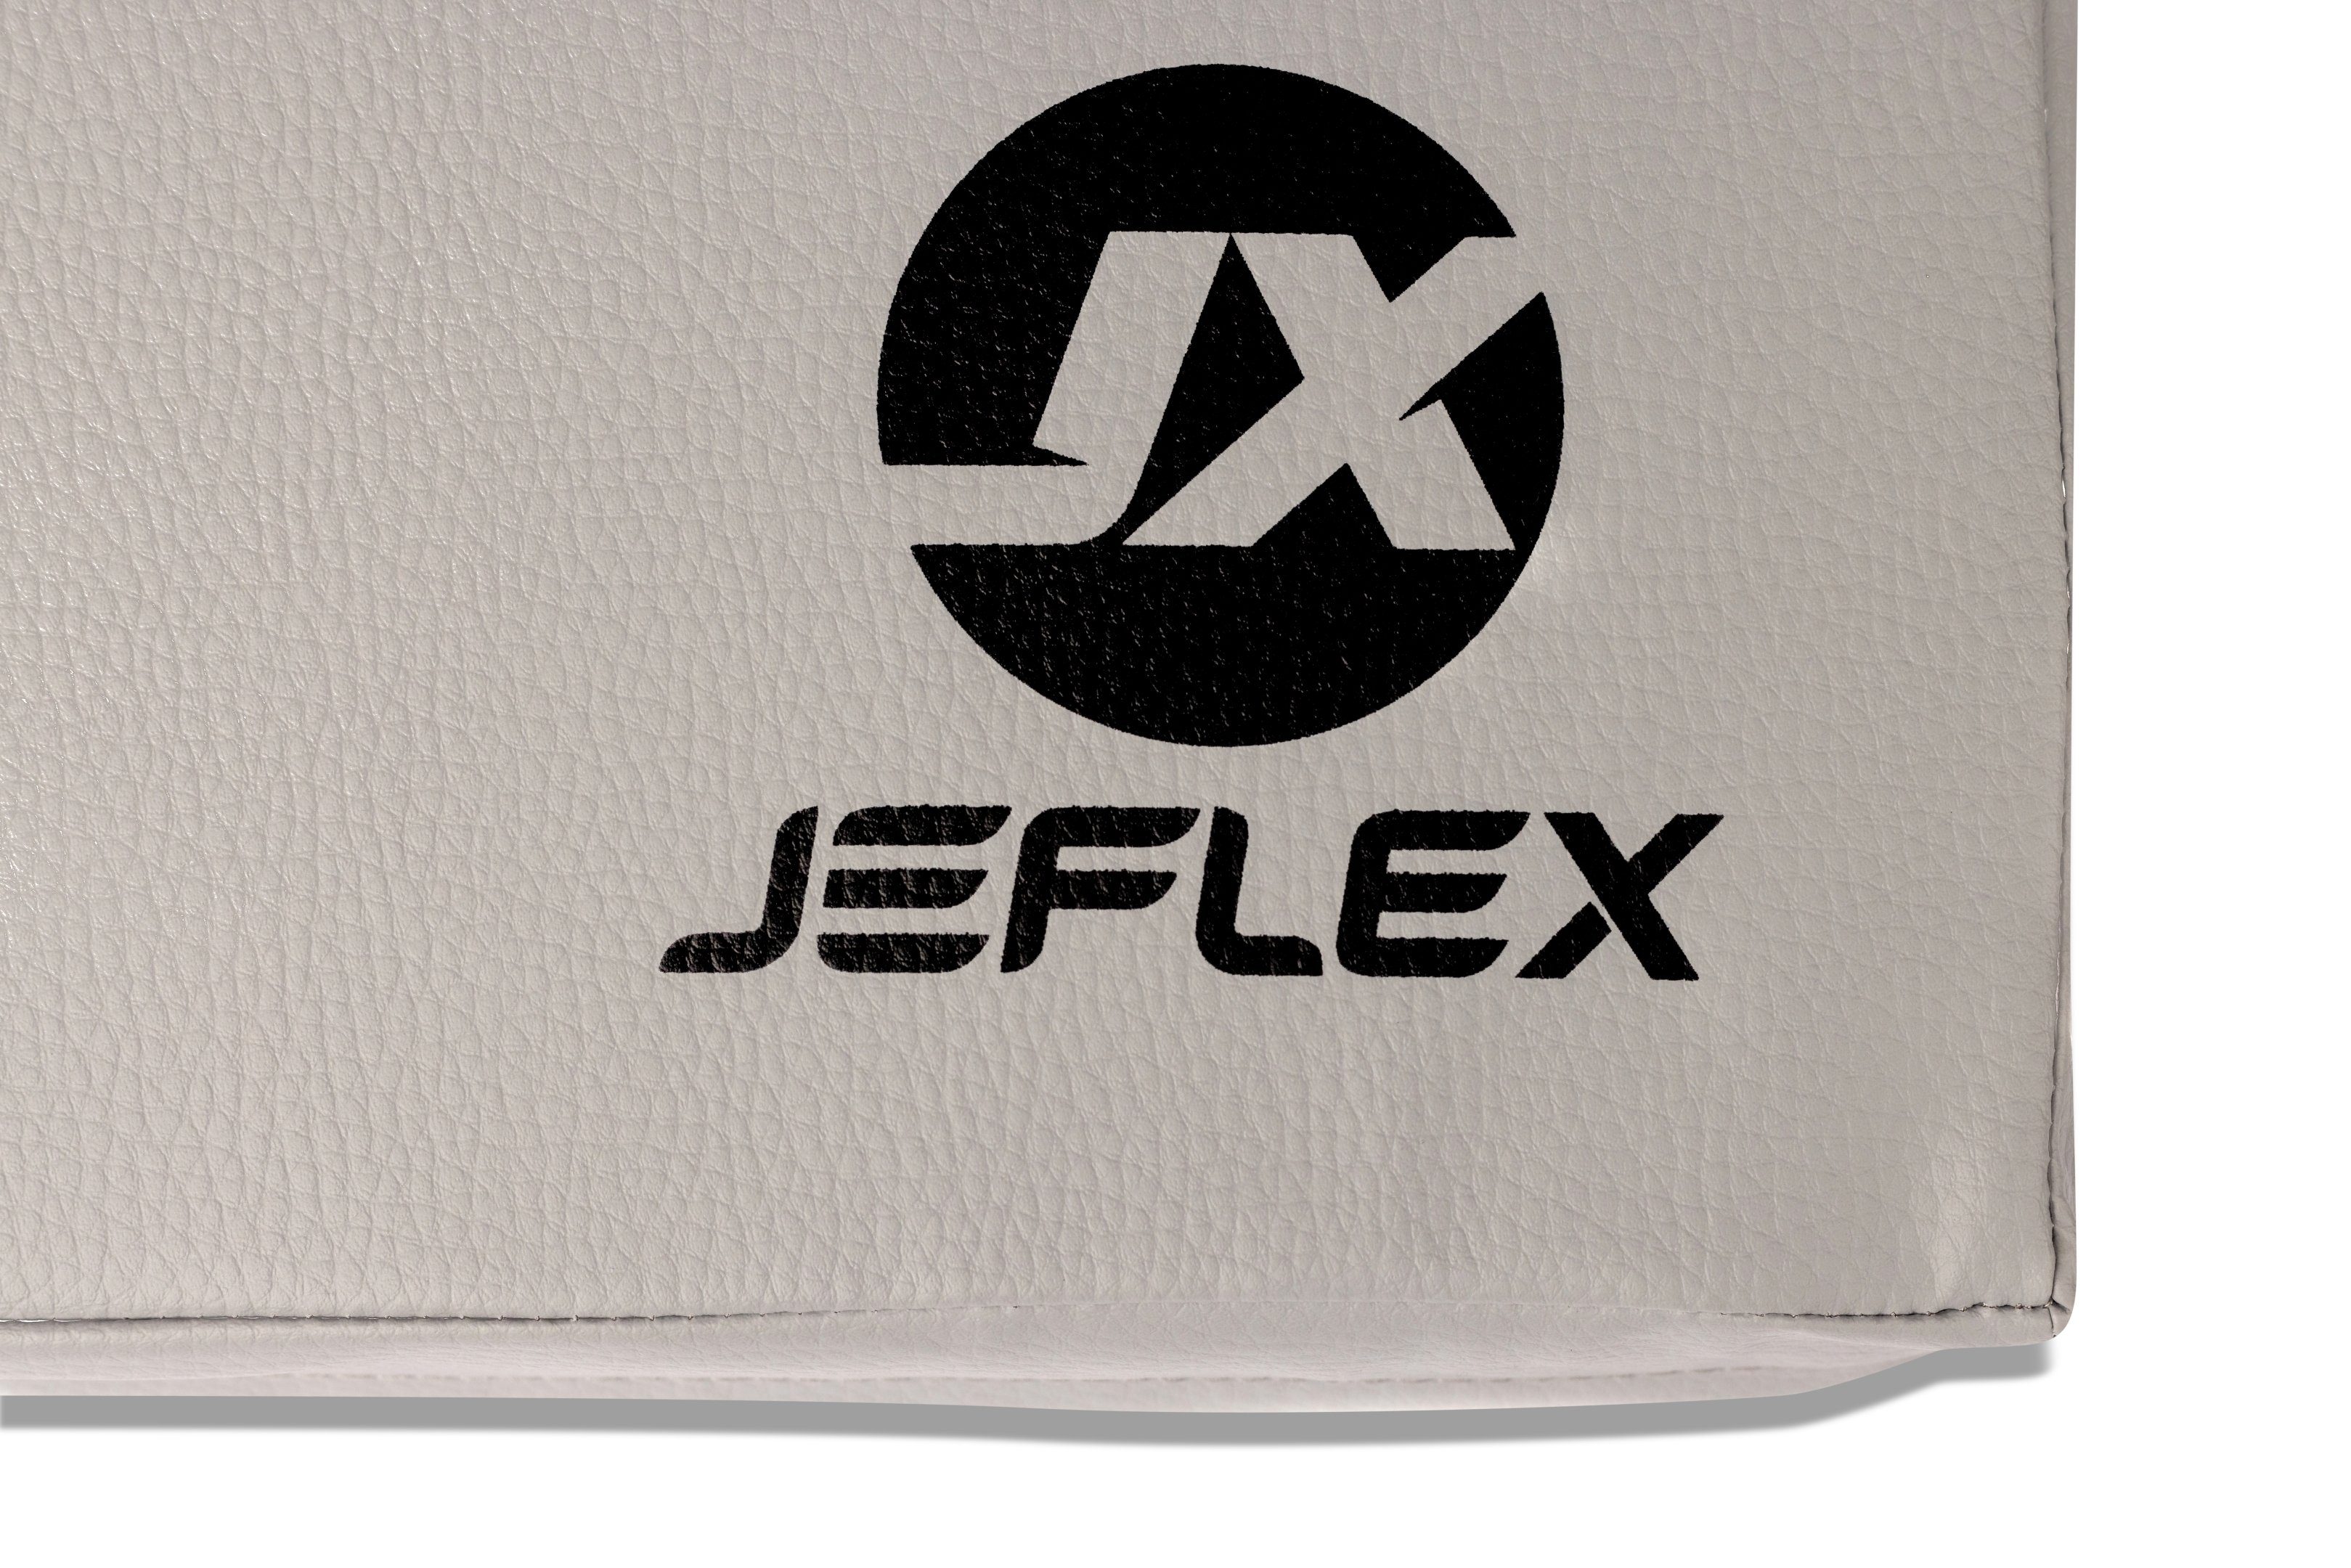 Jeflex Weichbodenmatte Jeflex Weichbodenmatte klappbar, 150cm x 100cm x 8cm, Made in Germany, 150cm x 100cm x 8cm, Made in Germany